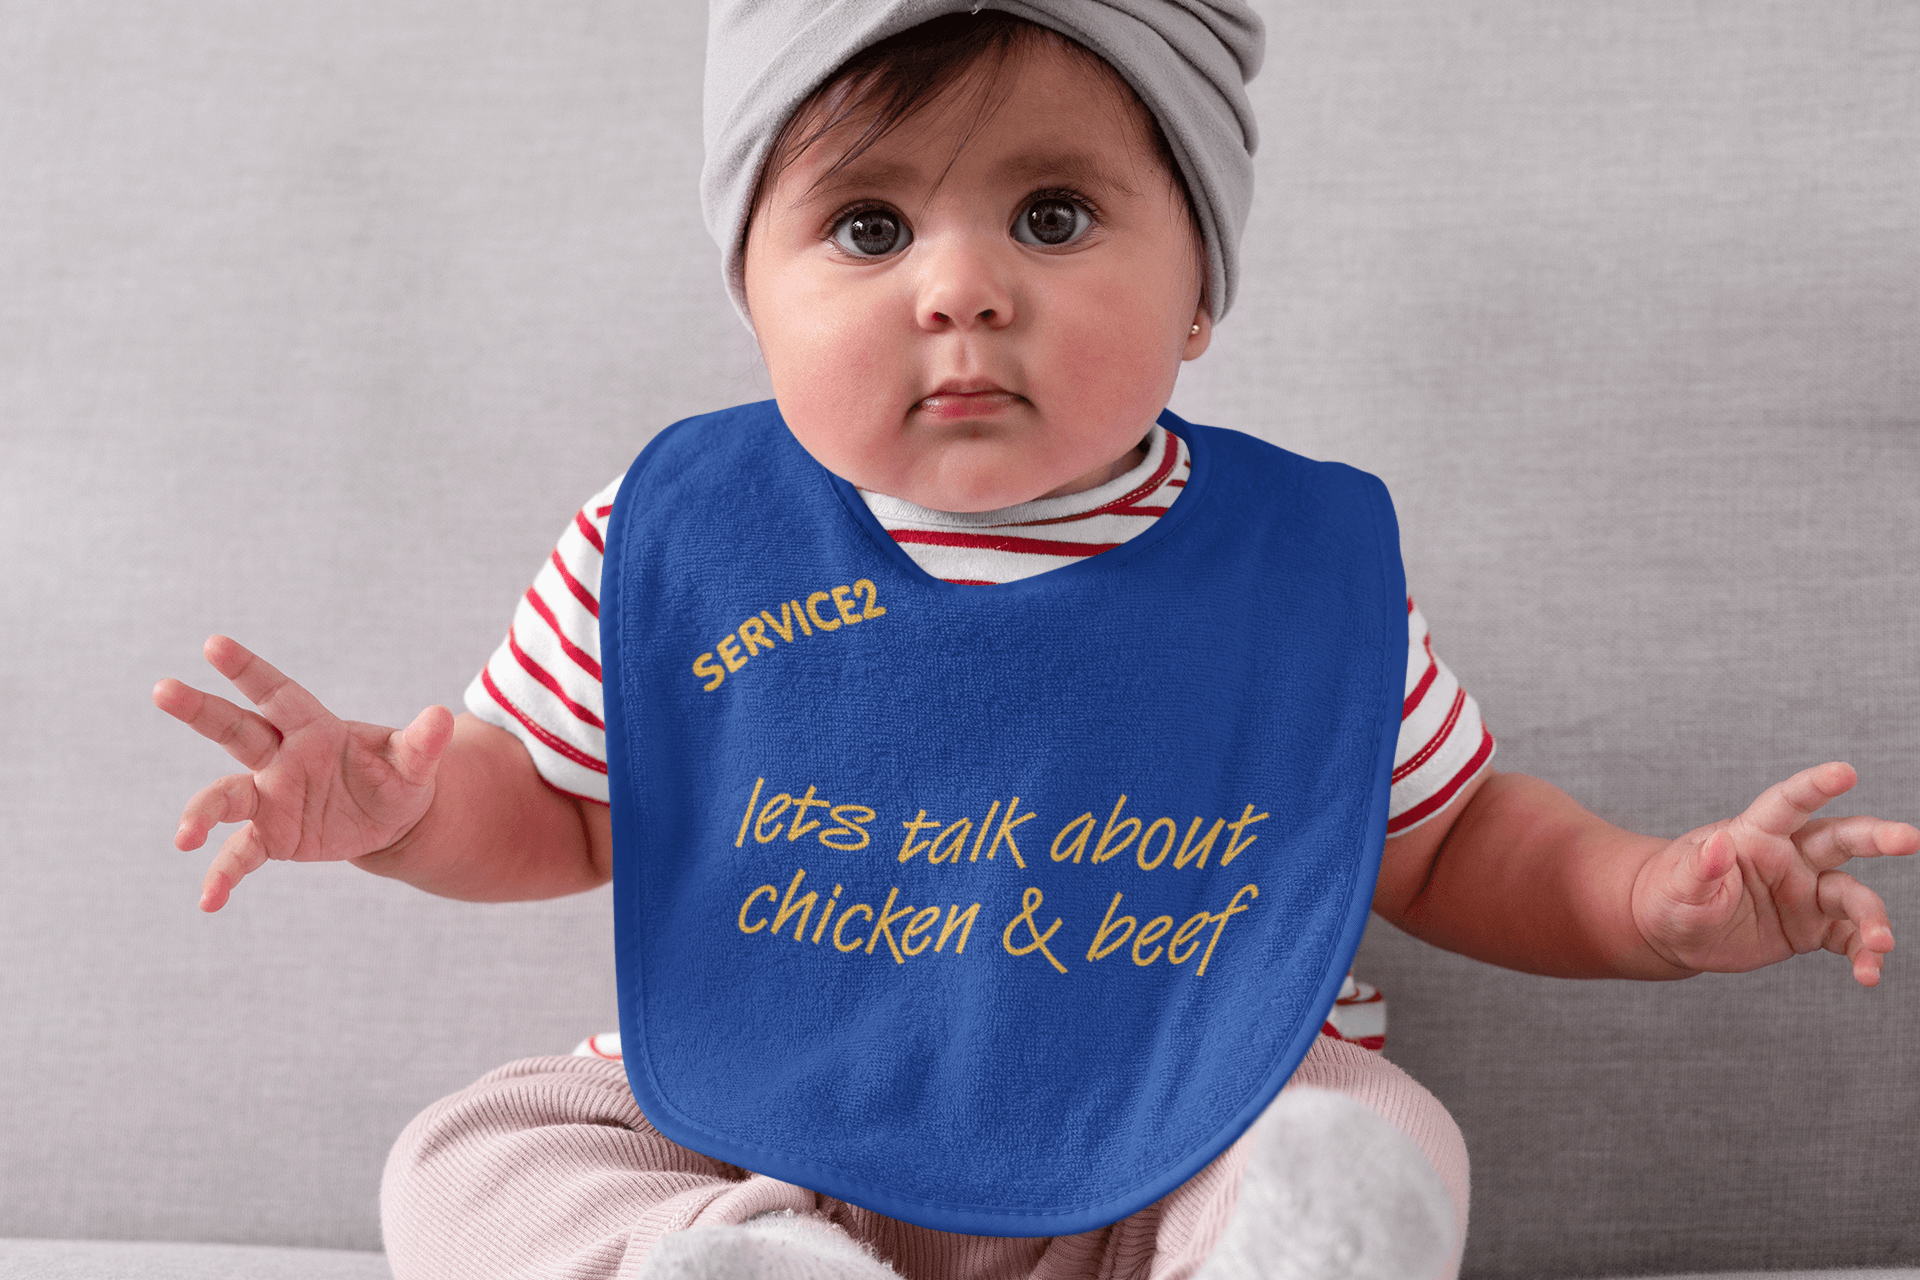 Babylätzchen "chicken & beef" - 25center.com